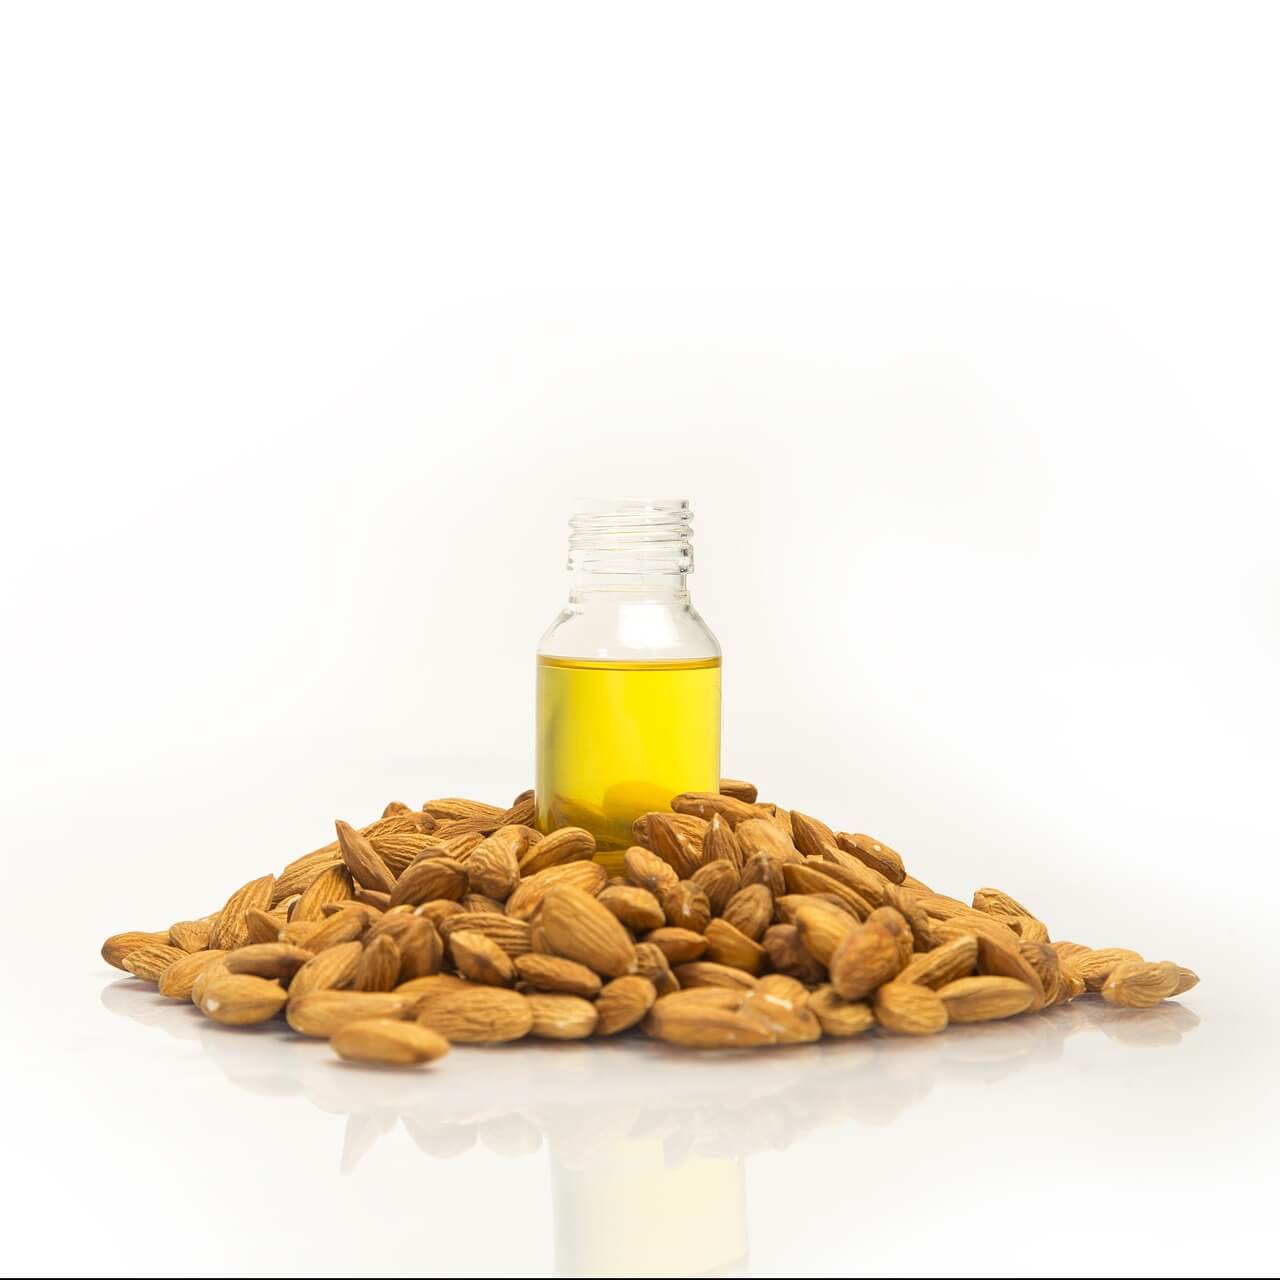 9 Amazing Benefits of Almond Oil